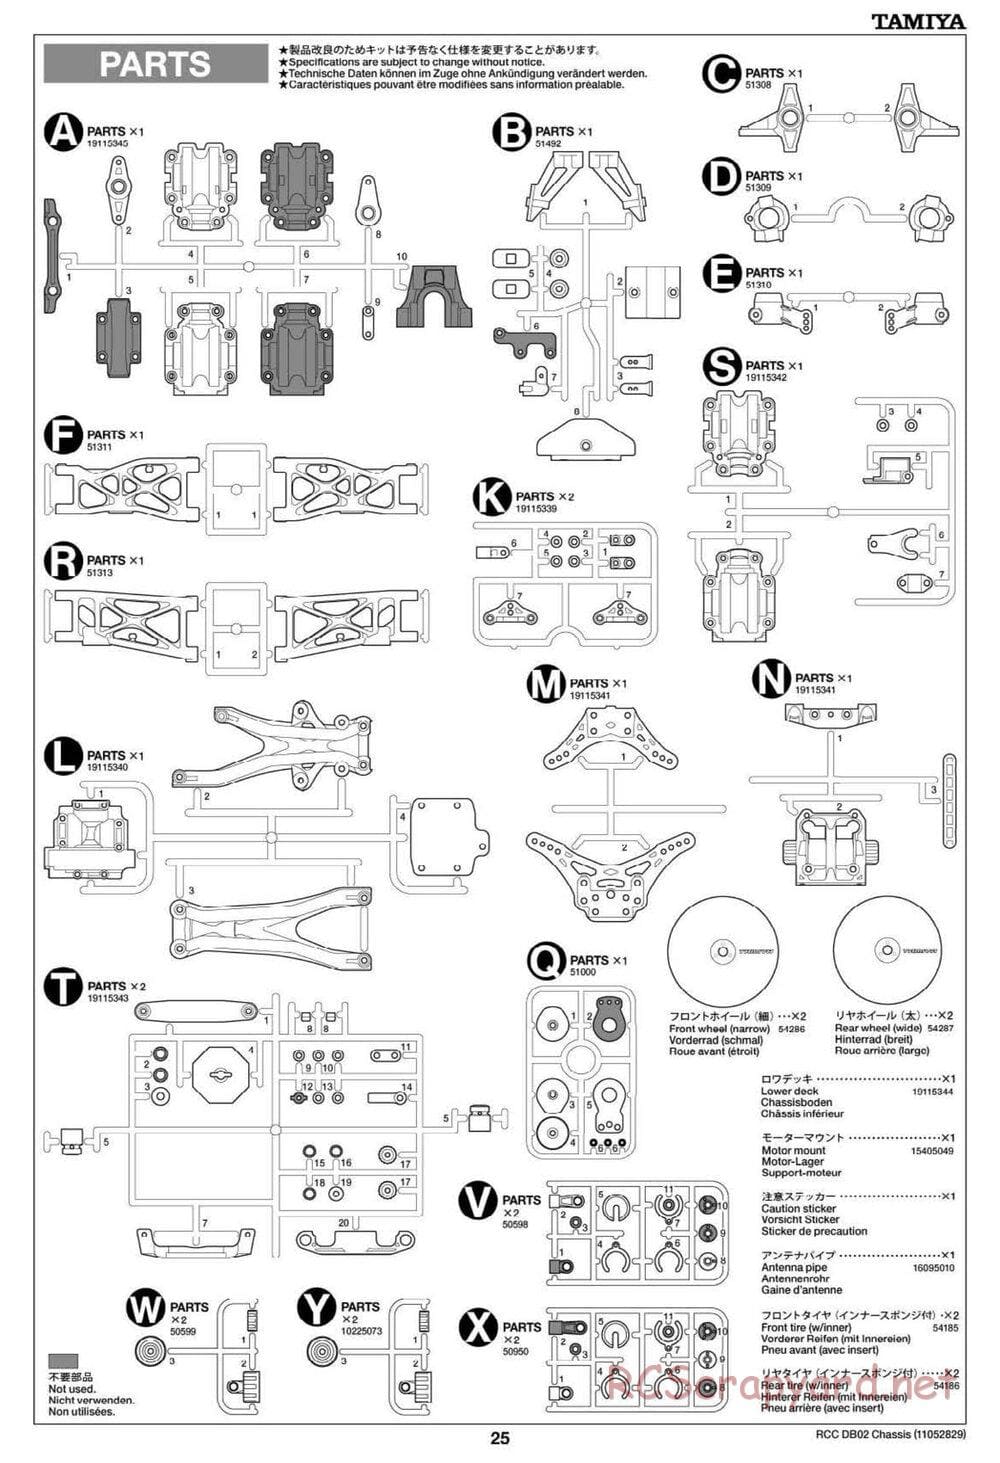 Tamiya - Leonis - DB-02 Chassis - Manual - Page 25